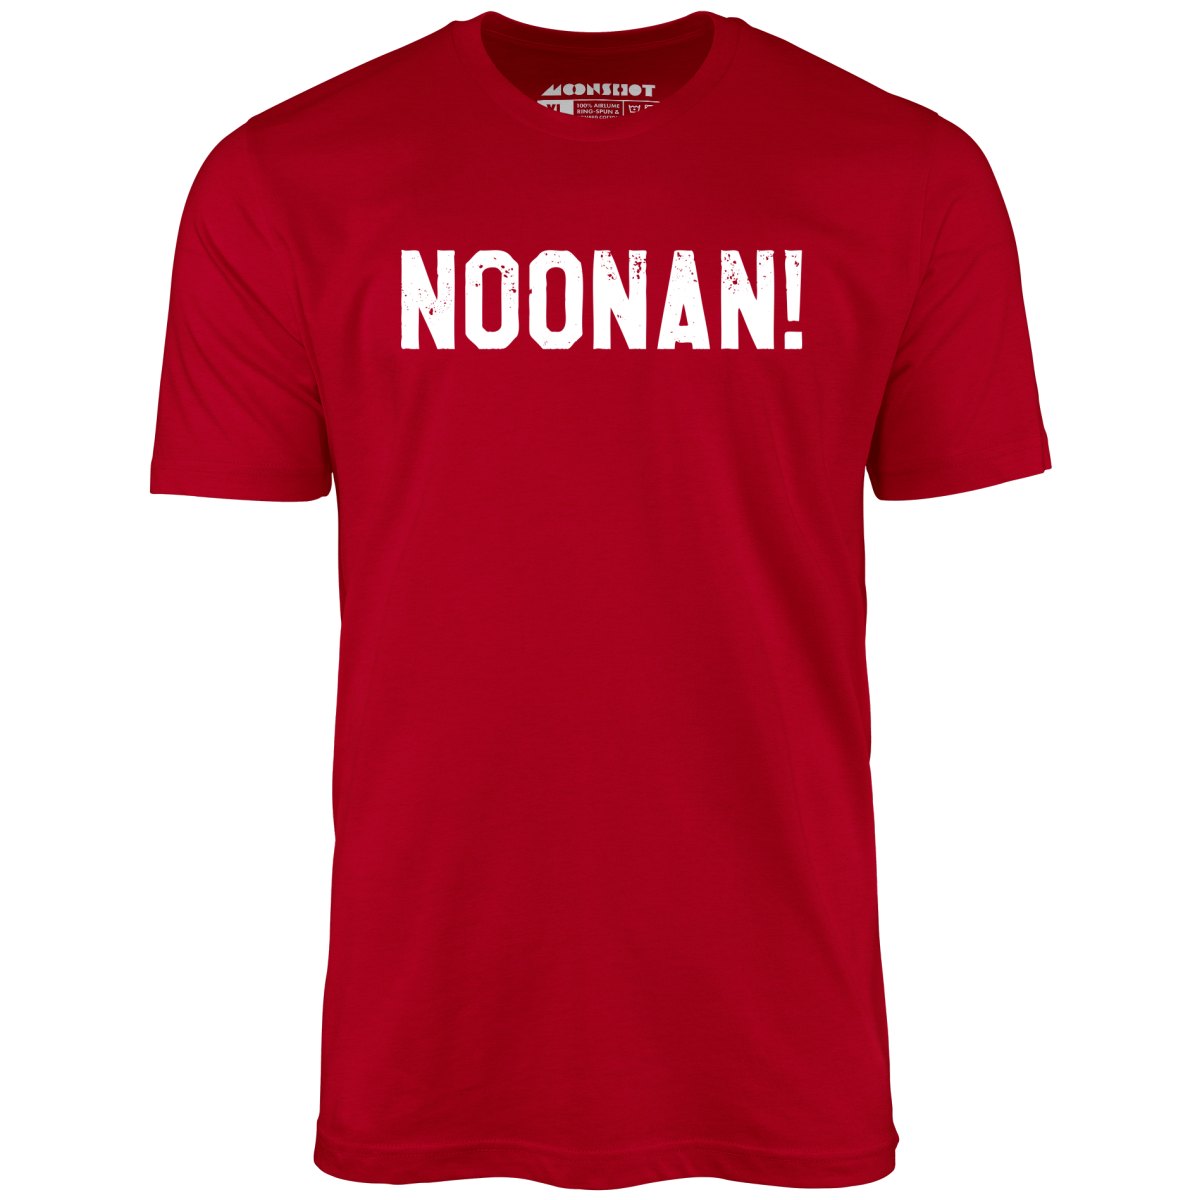 Noonan! - Unisex T-Shirt